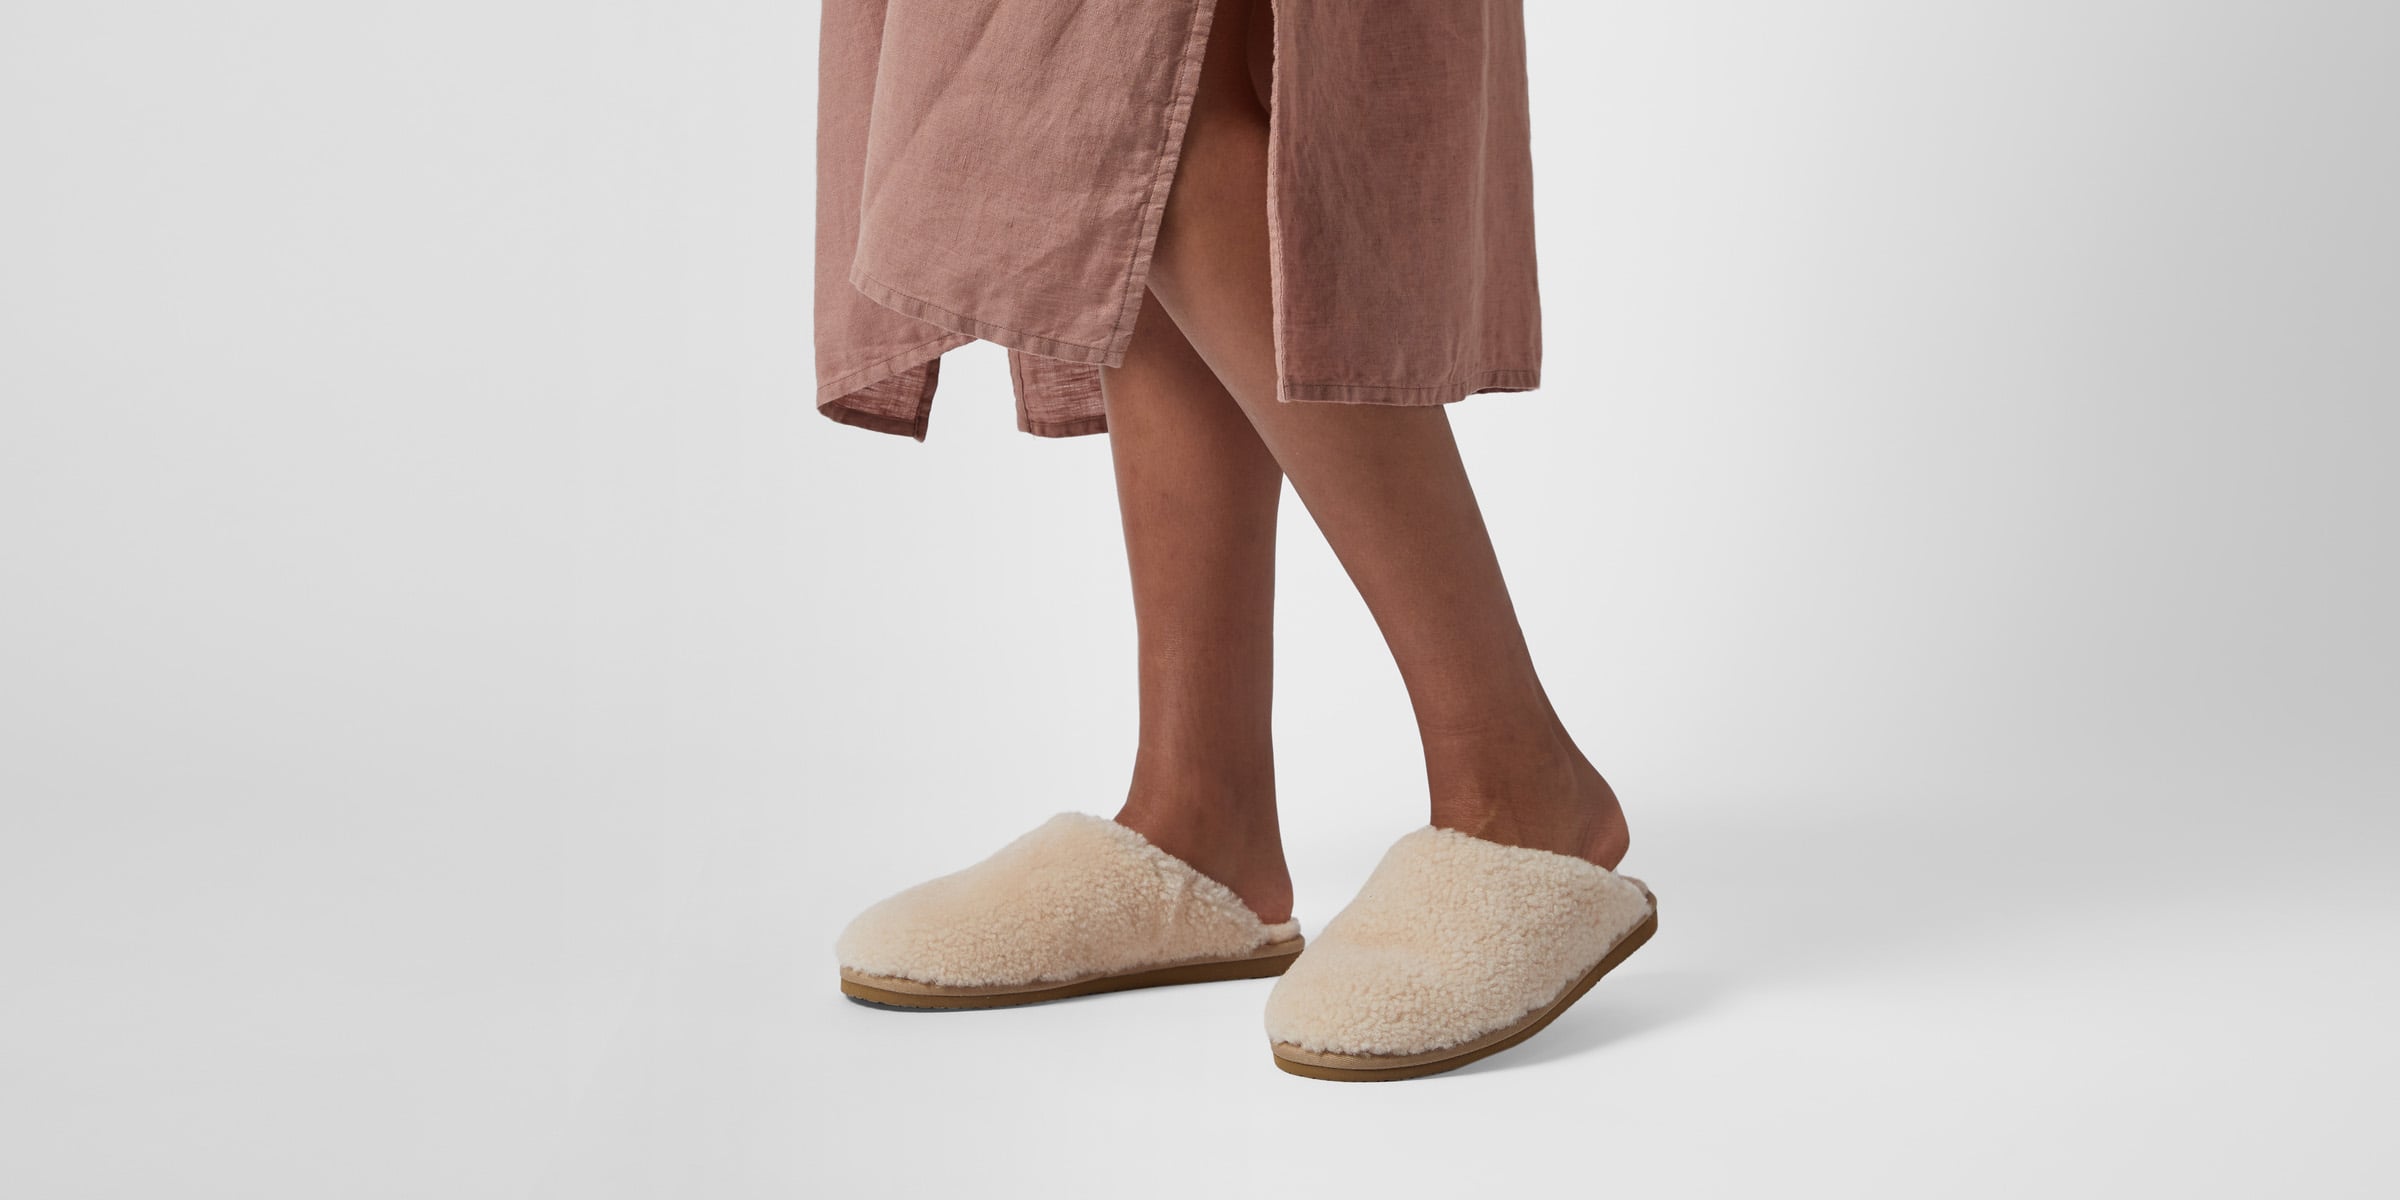 FRALOSHA Womens Slipper Sock Coral Velvet Indoor Spring-Autumn Super Soft Warm Cozy Fuzzy Lined Booties Slippers 